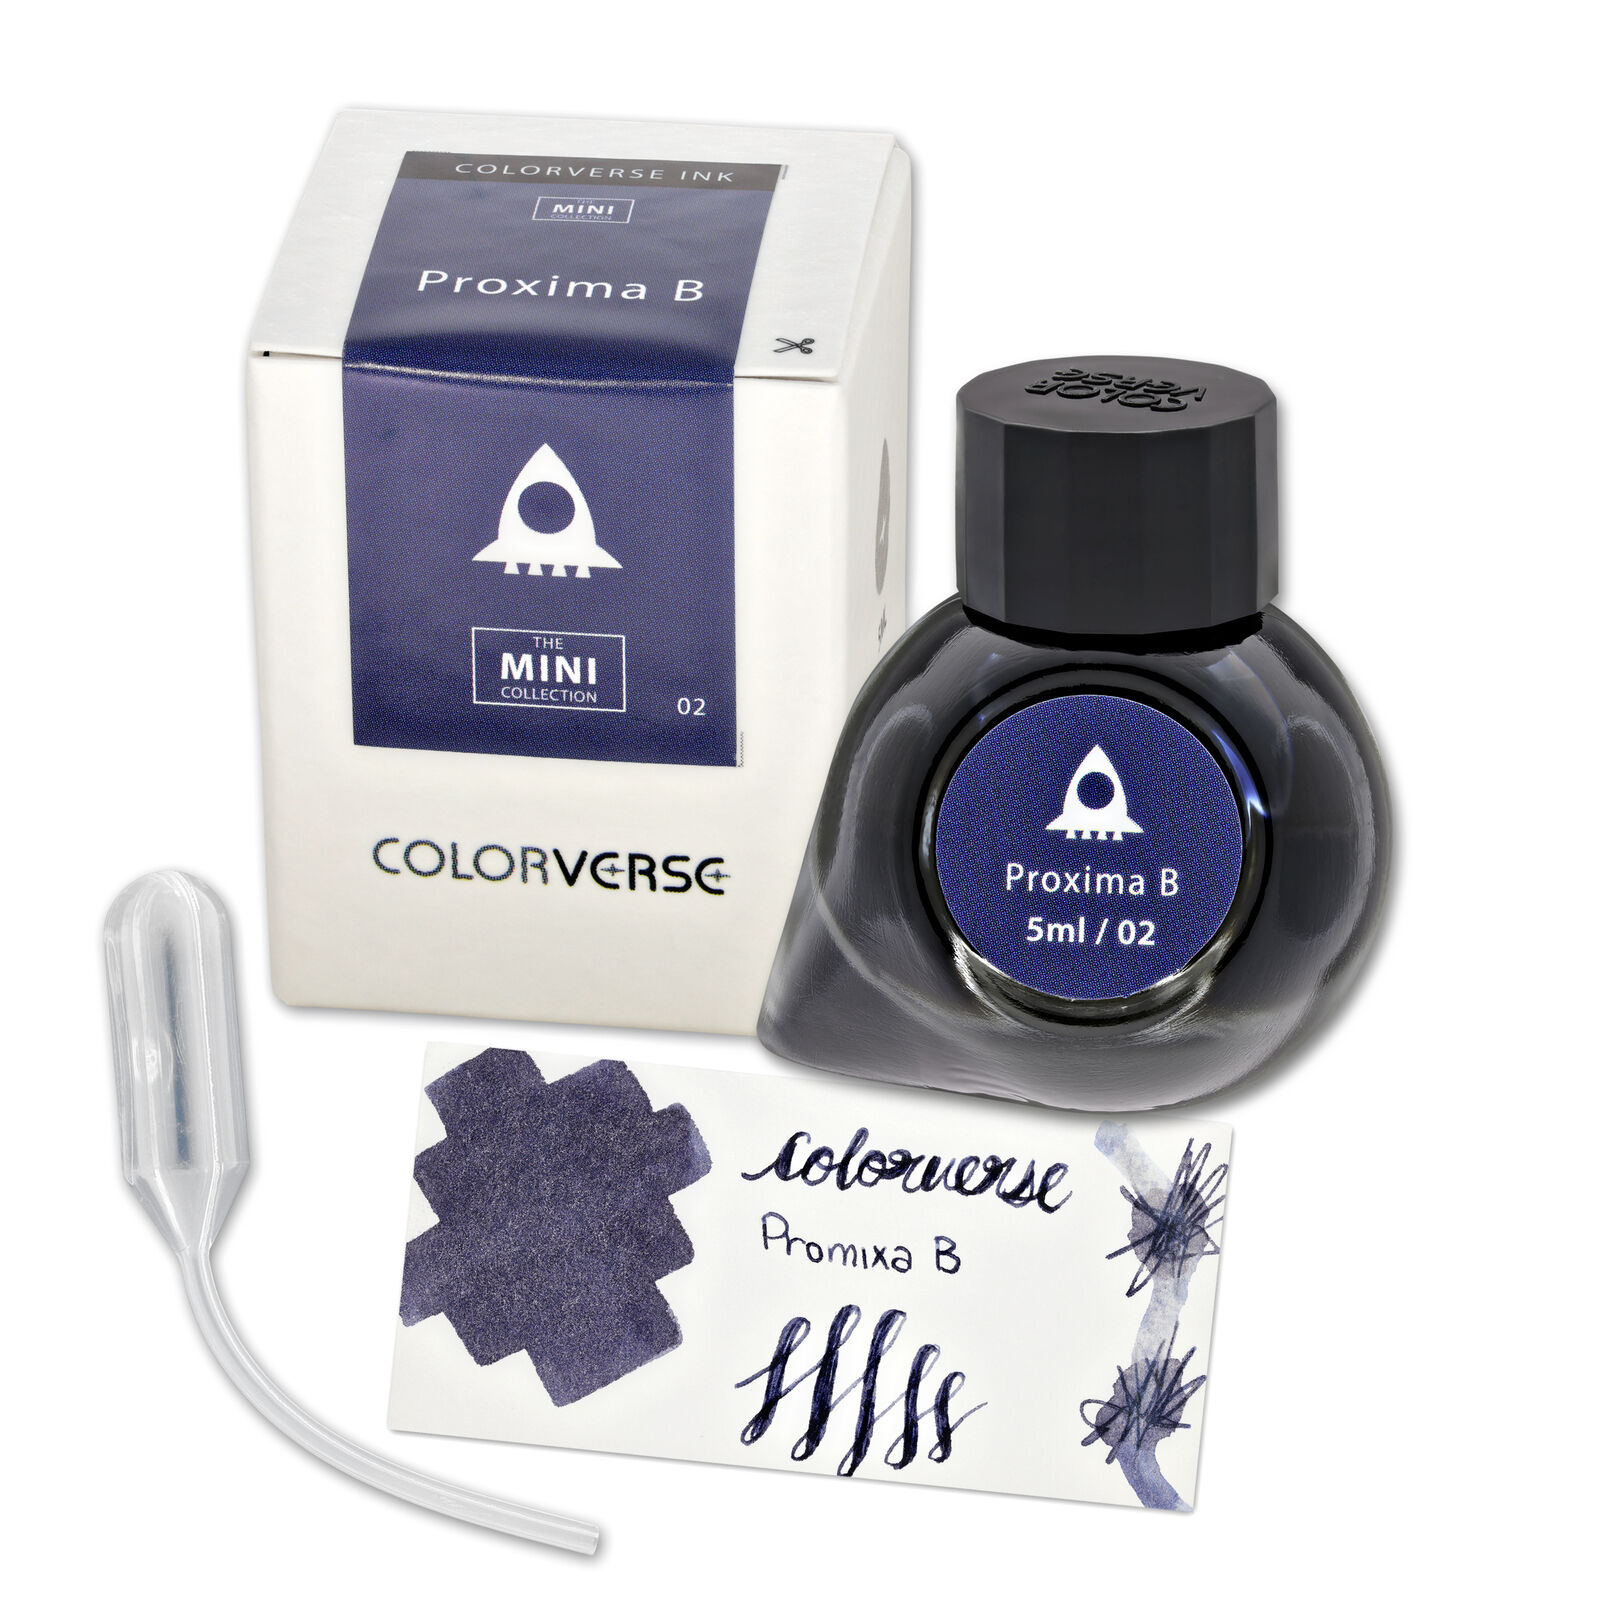 Colorverse Spaceward Mini Bottled Ink in Proxima B - 5mL - NEW in Box